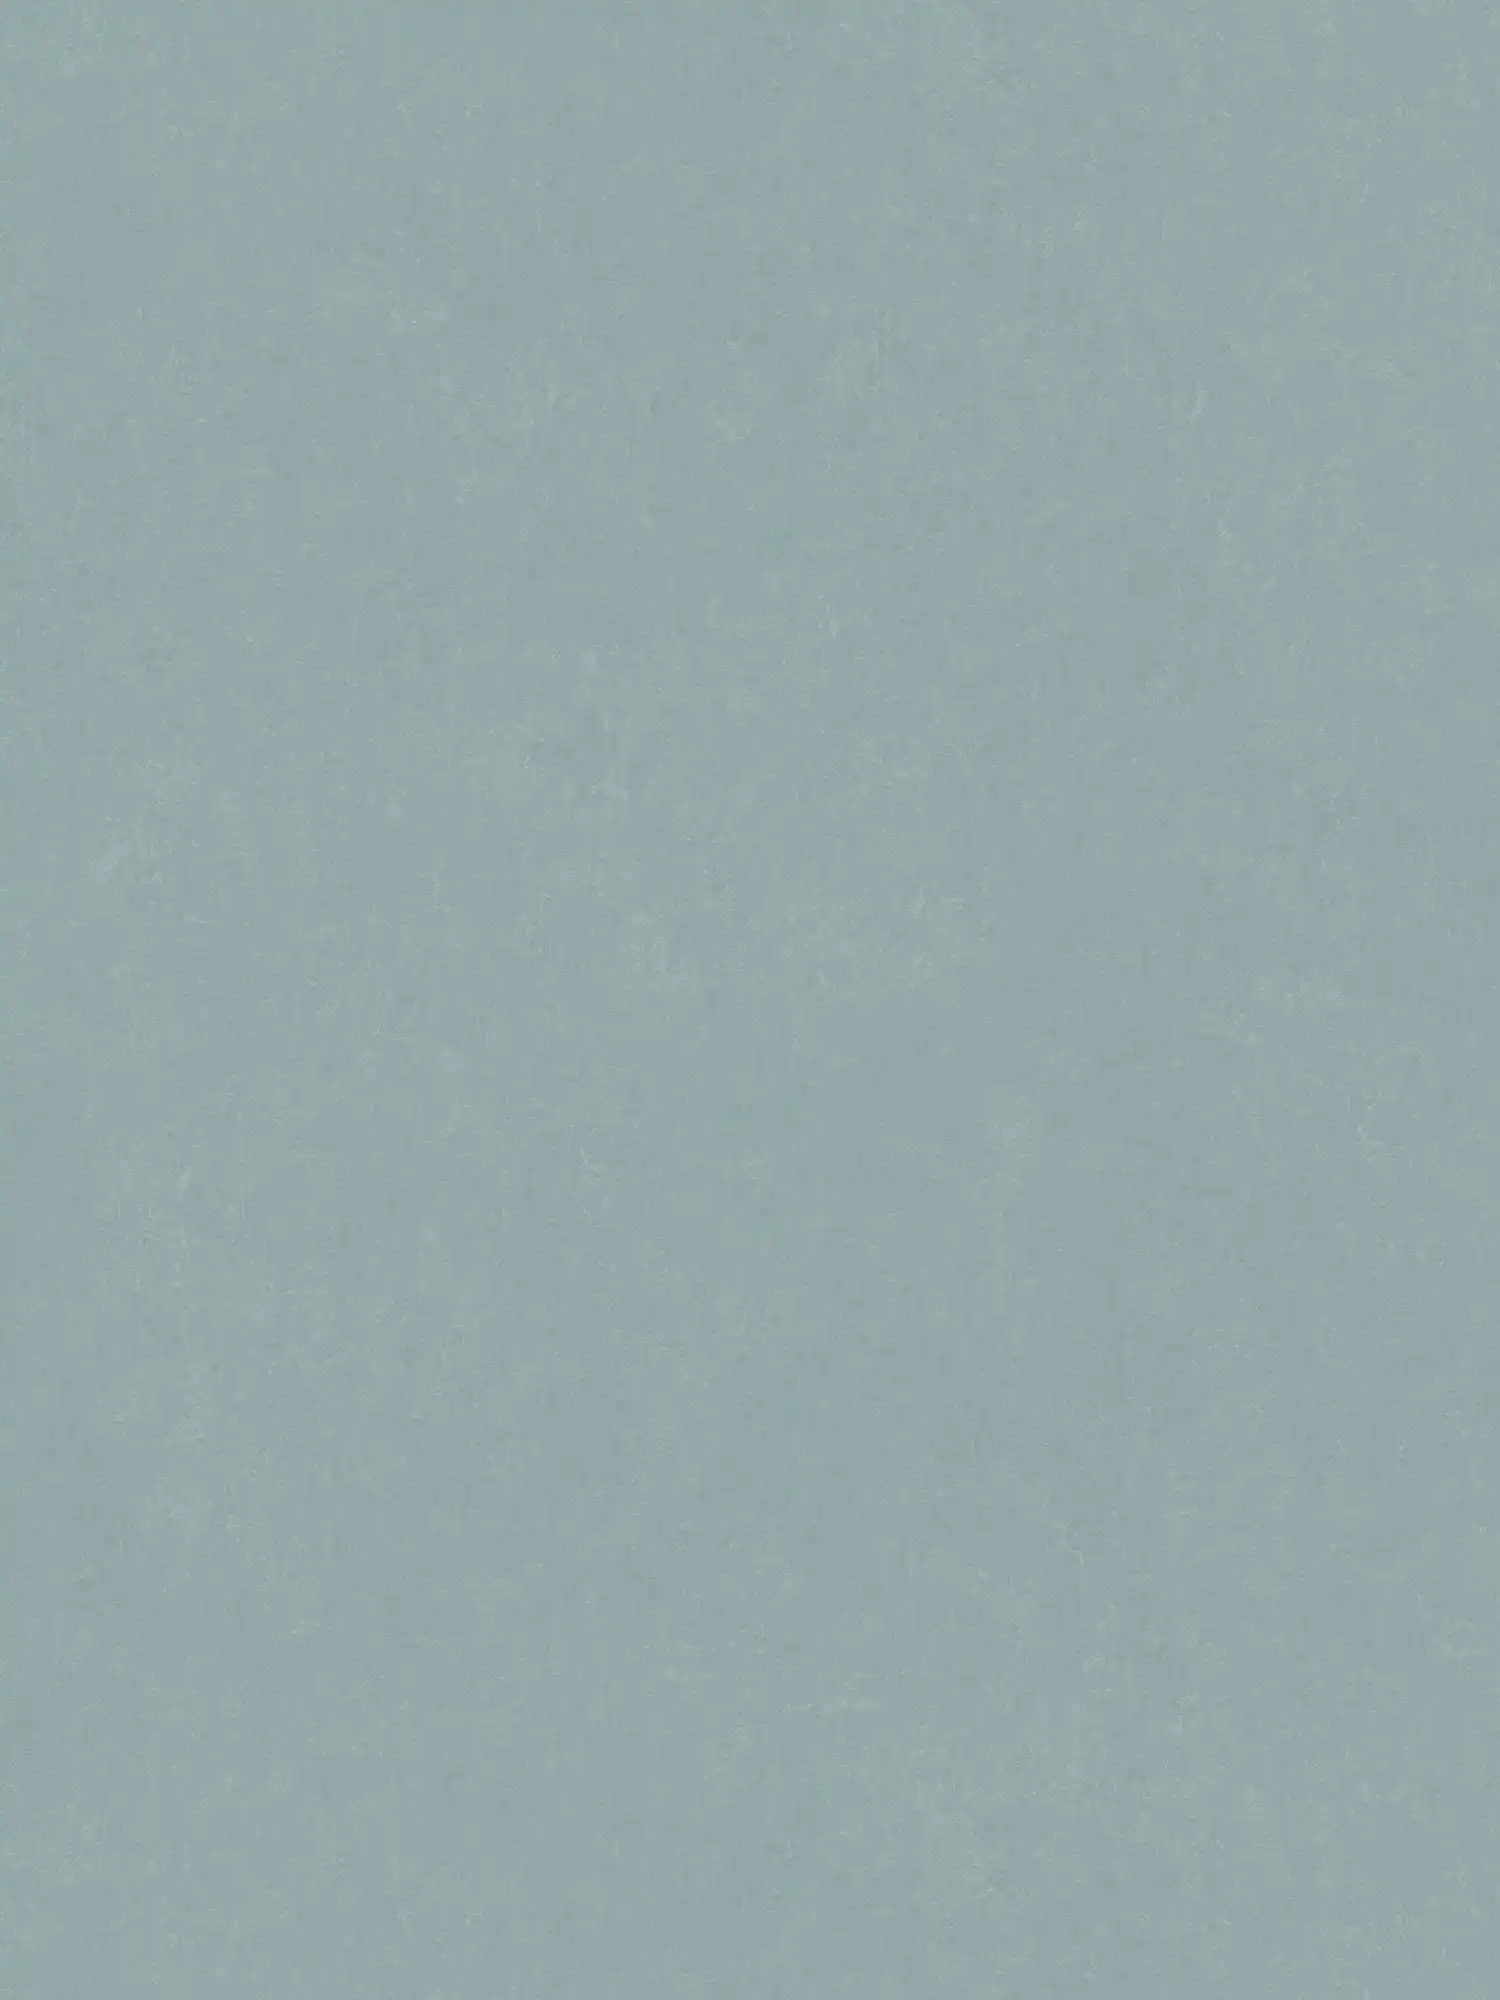 Plain wallpaper pale green with texture design - blue
